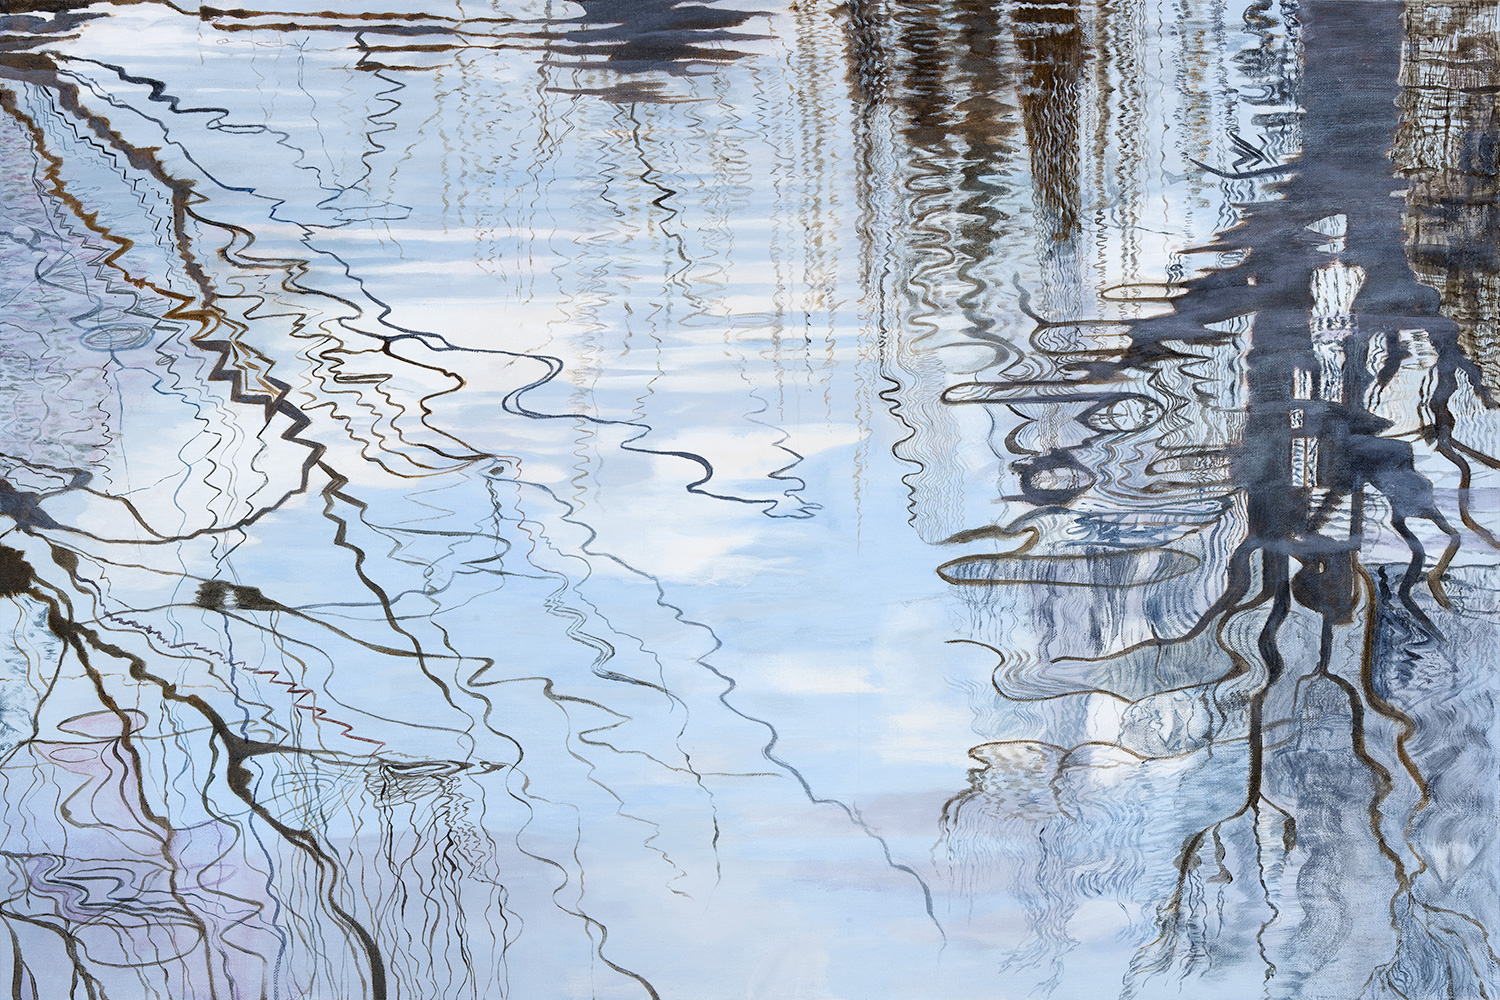 Pond-Life (Megan Ecclestone)